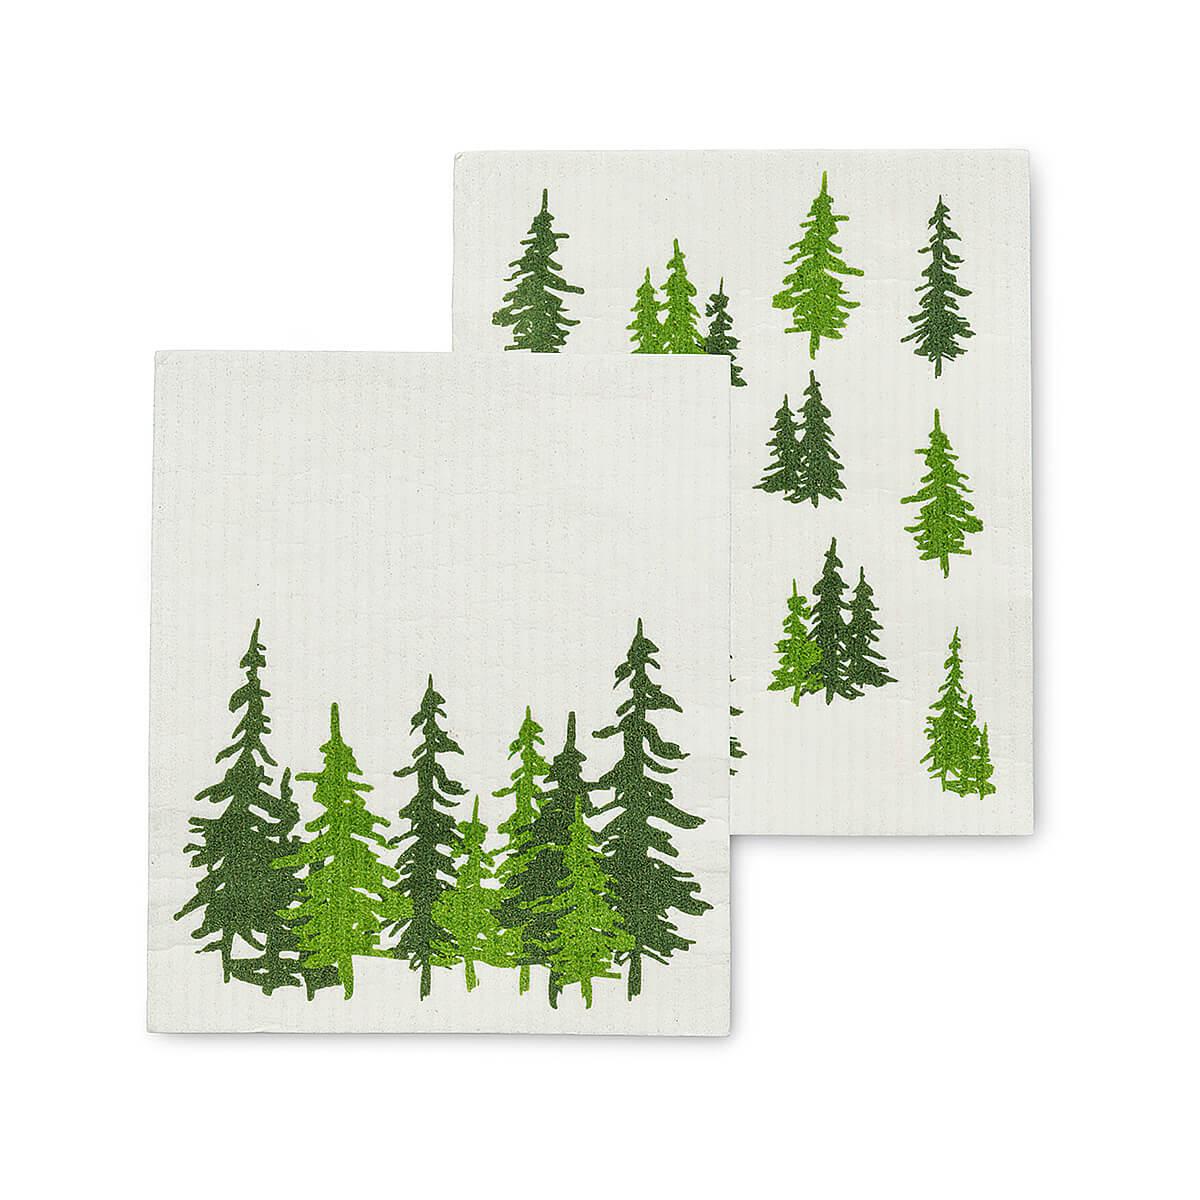  Evergreen Forest Dishcloths - 2 Pack